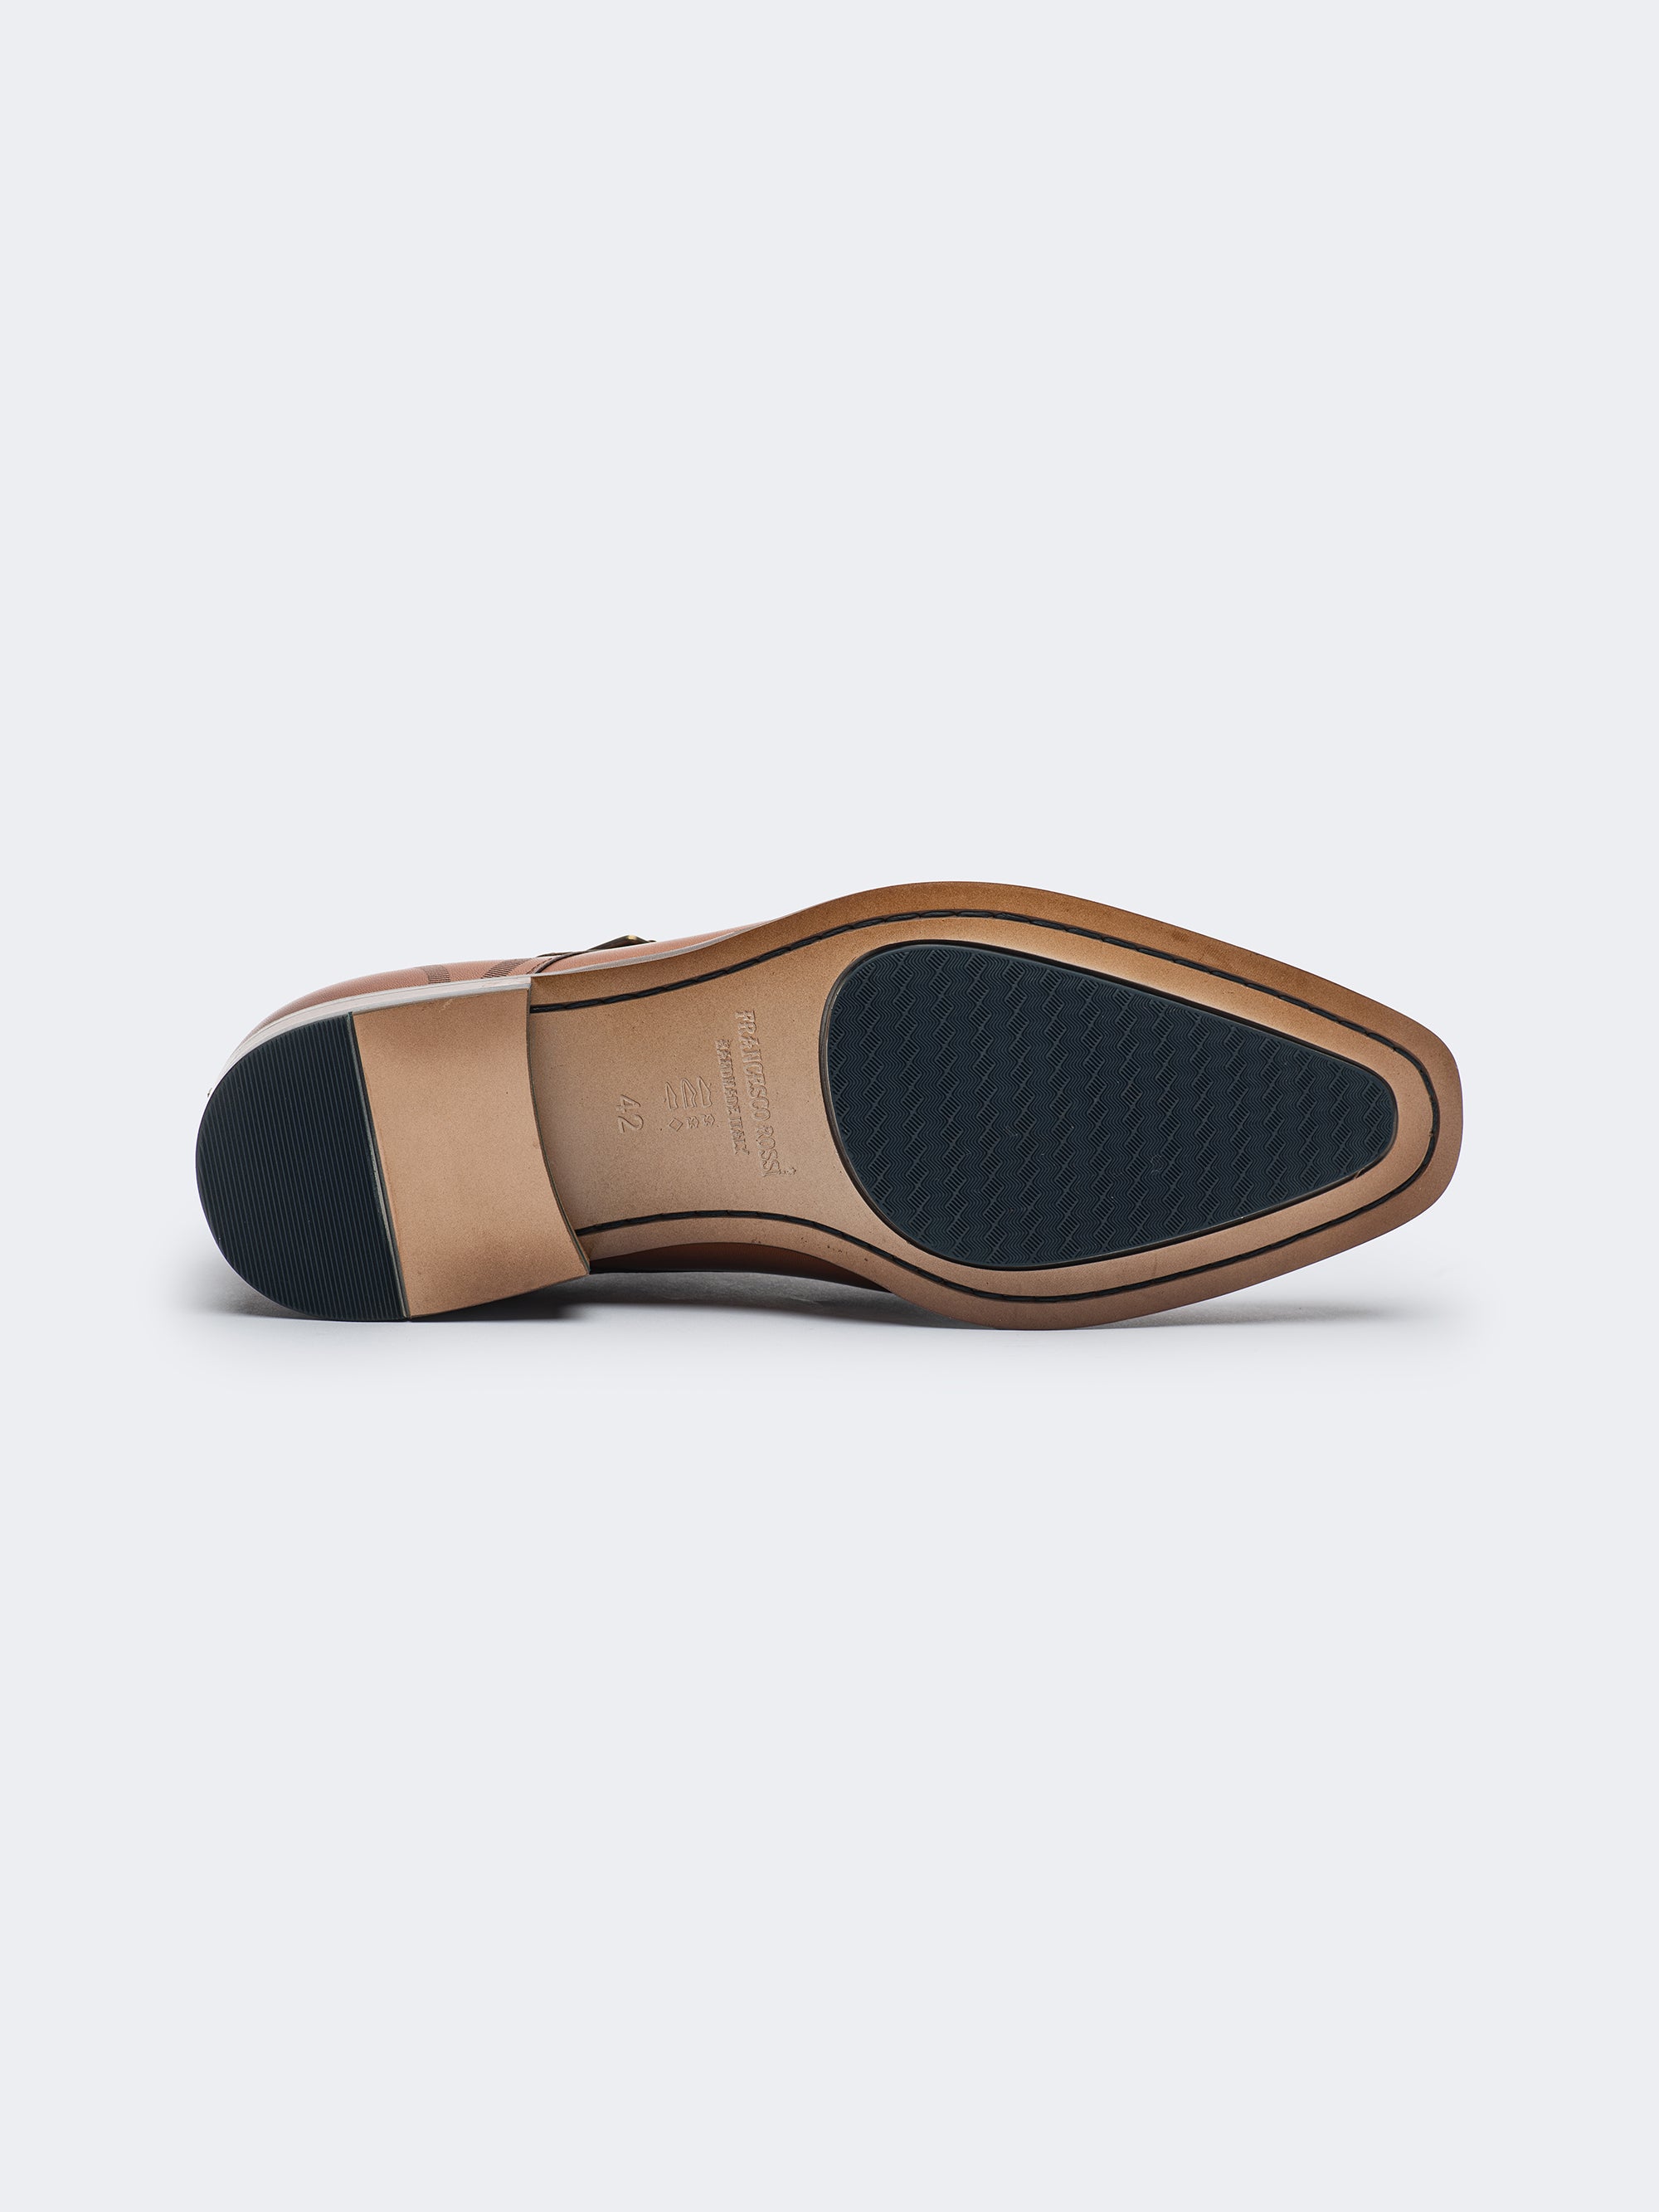 Brown - Double Monk Shoe